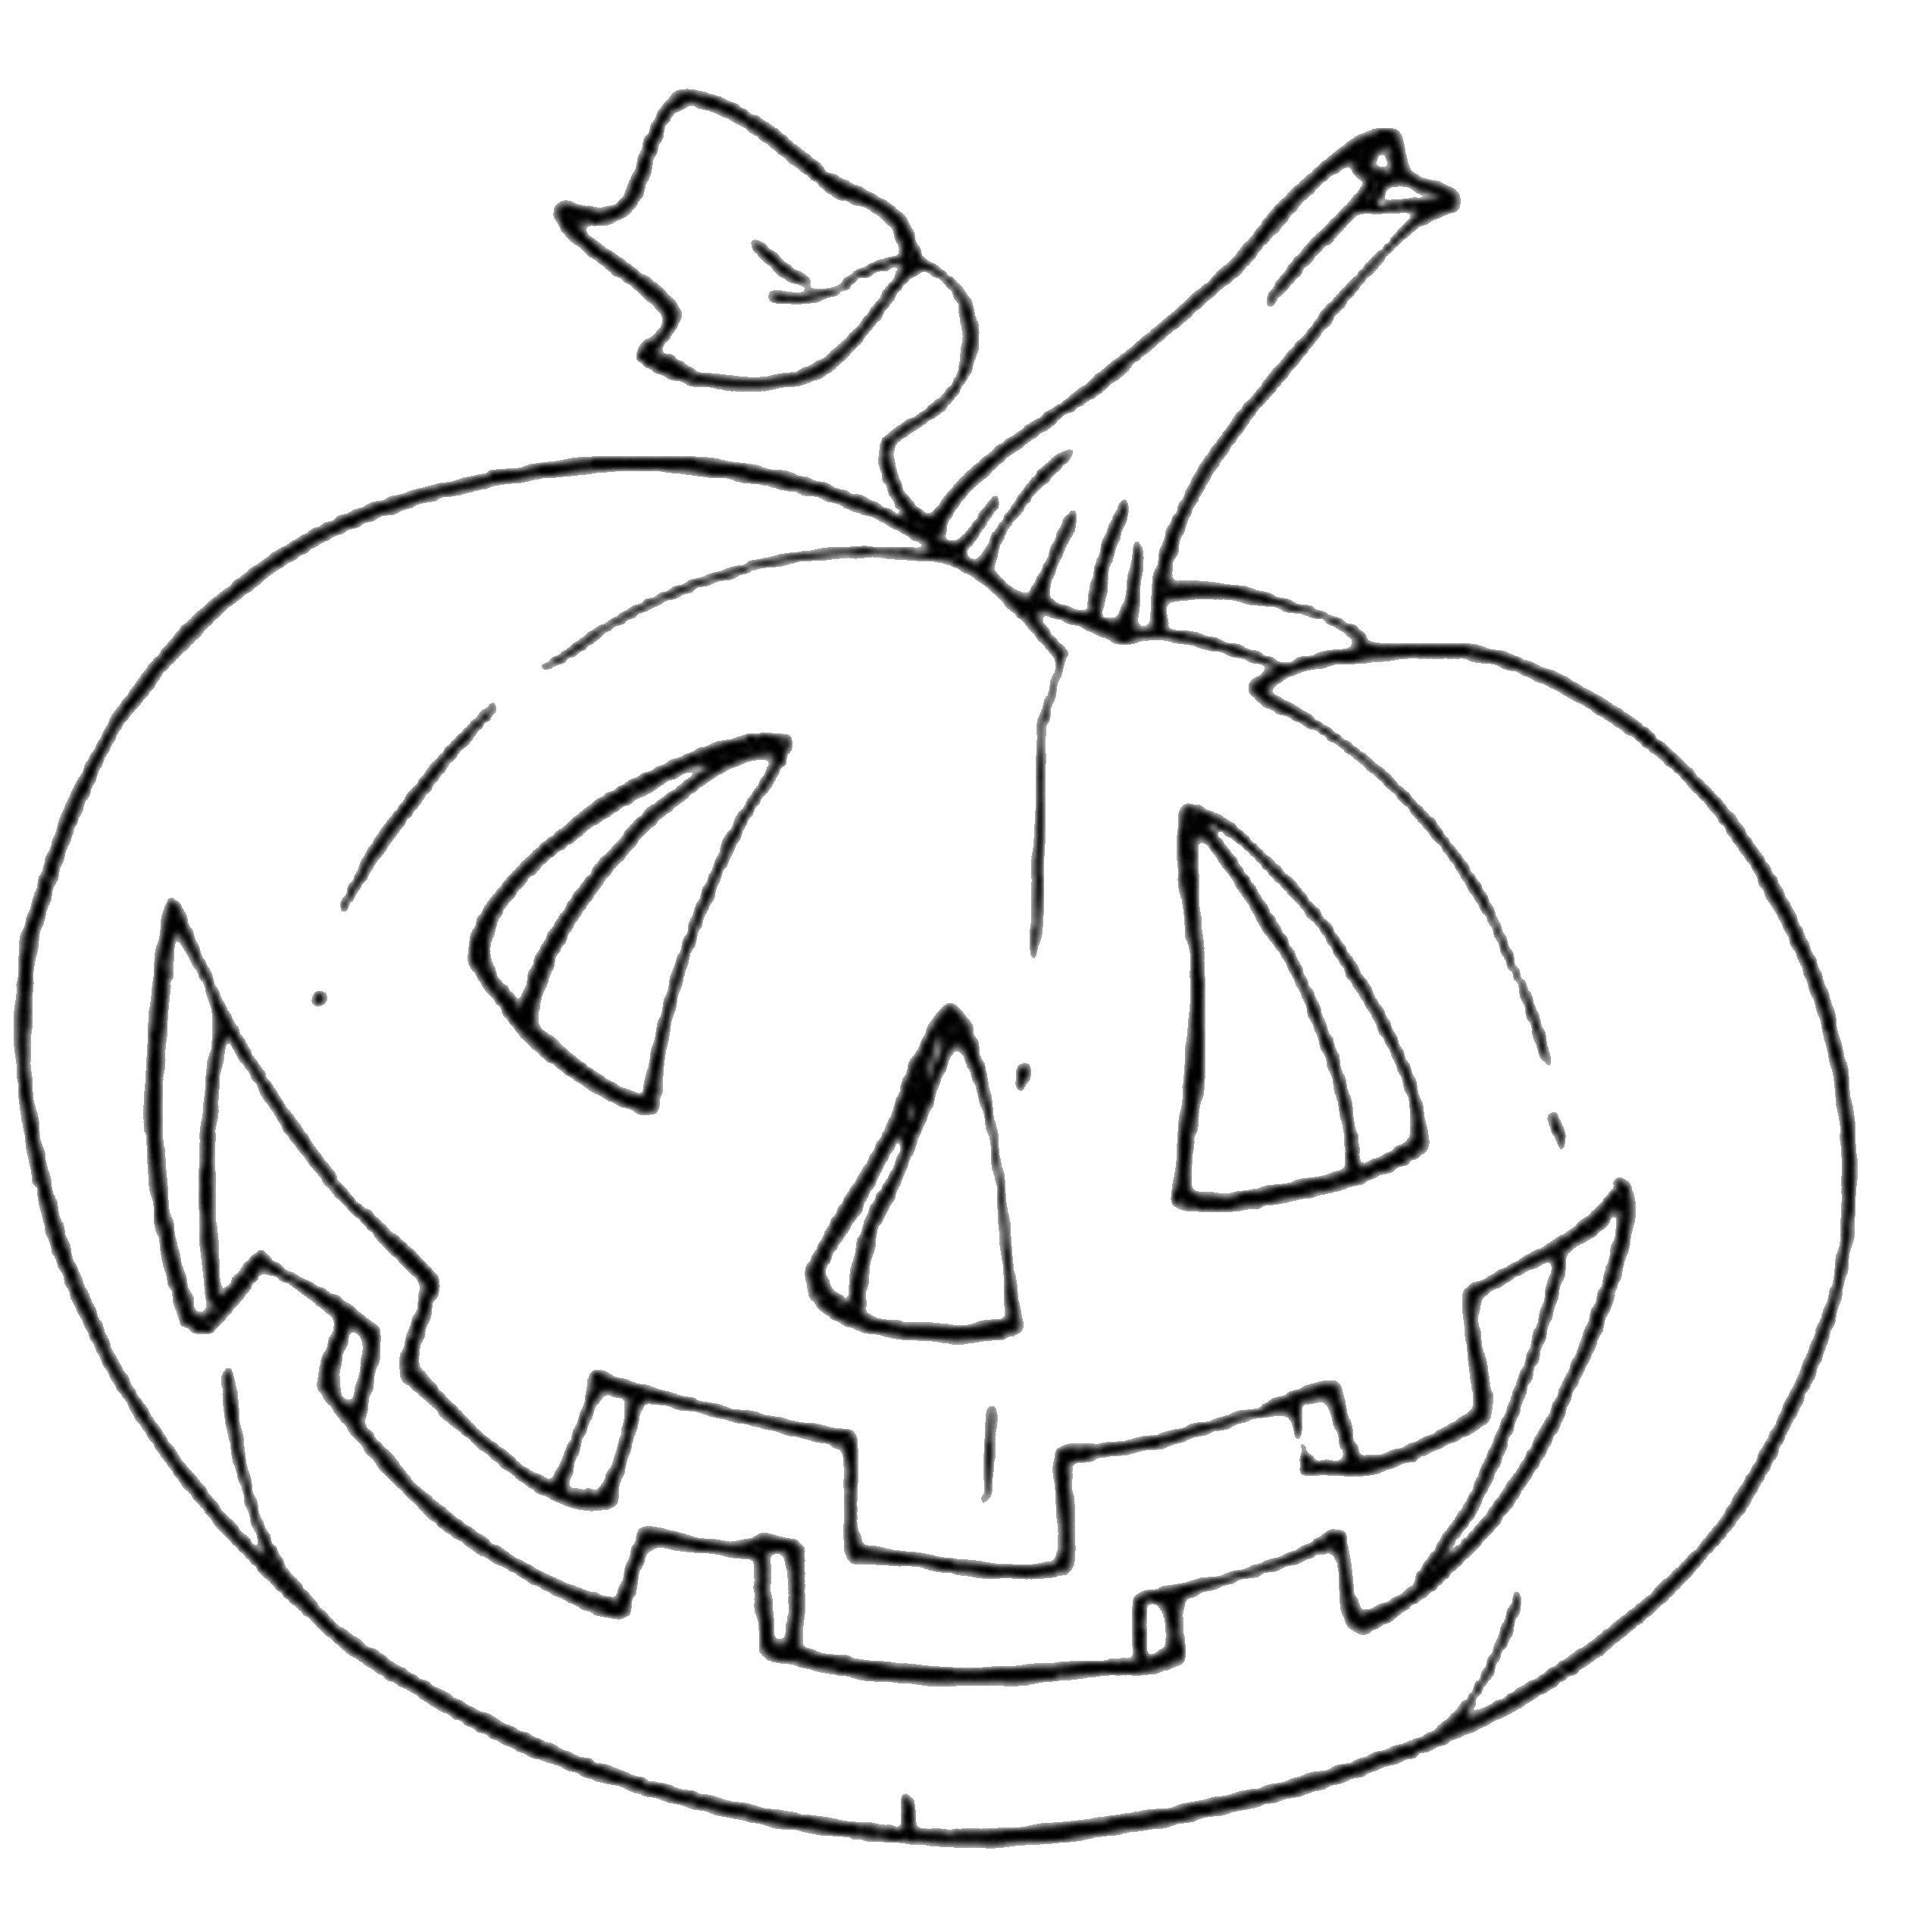 Coloring Pumpkin on Halloween. Category pumpkin Halloween. Tags:  pumpkin, Halloween, holiday.